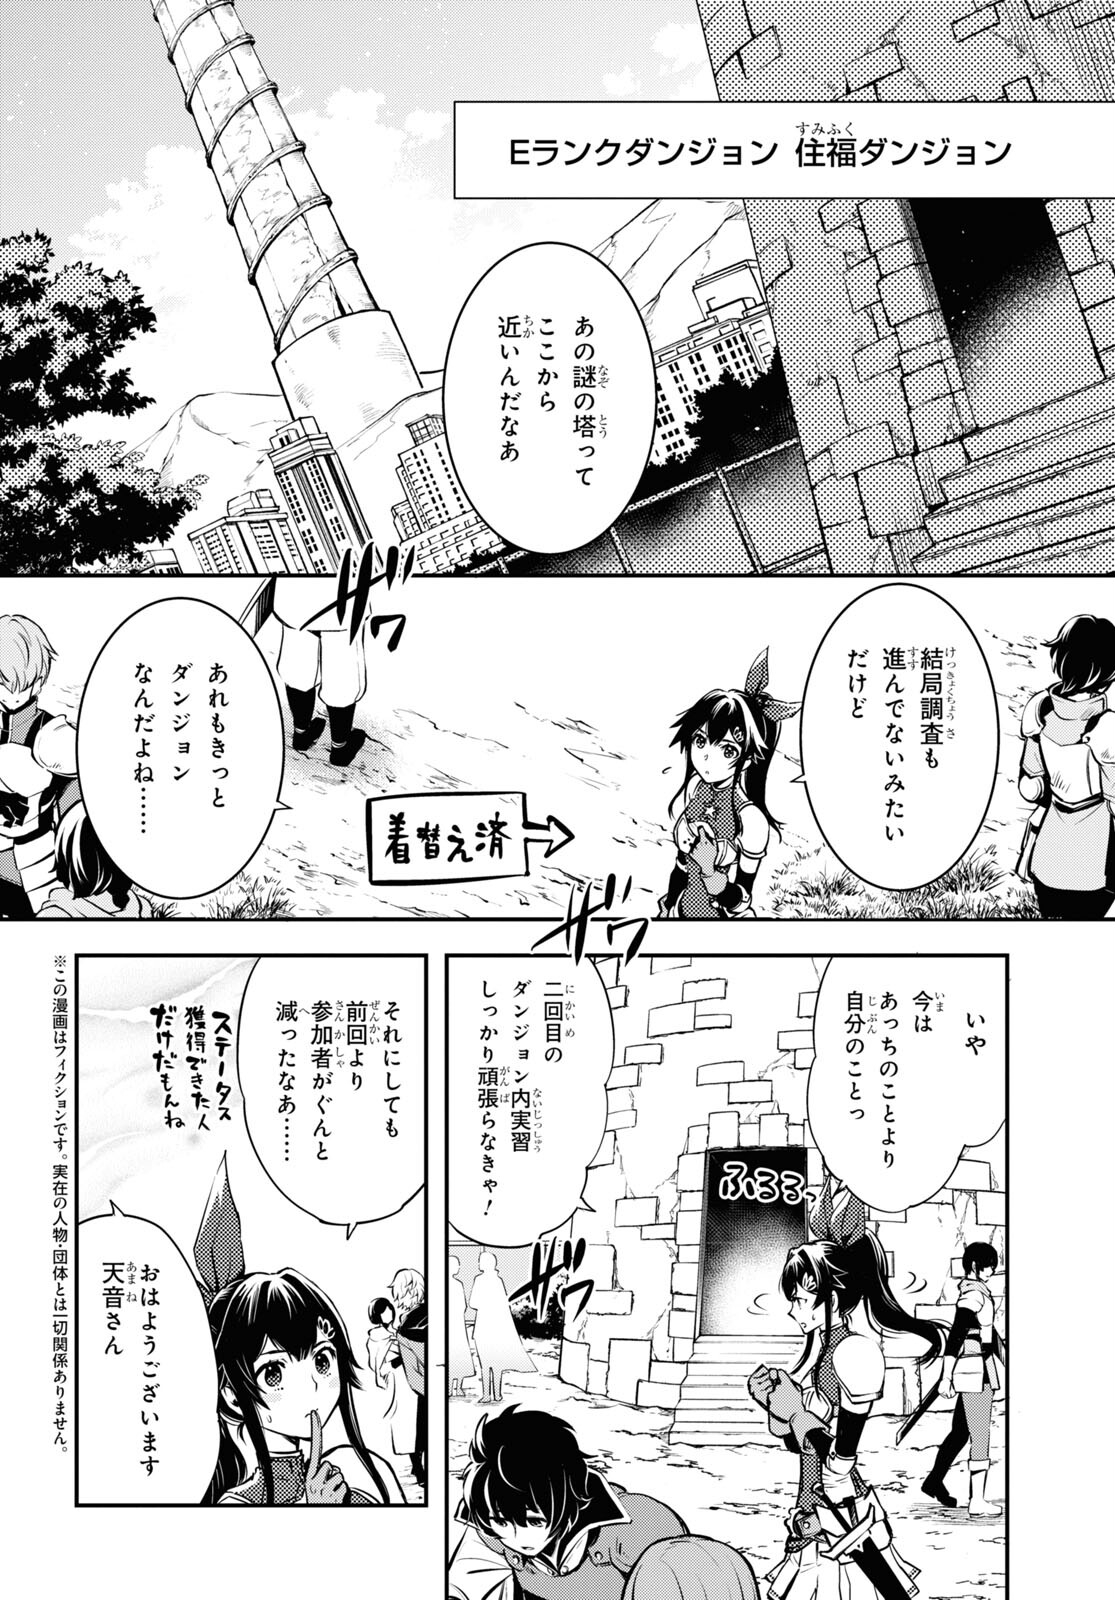 Sekai Saisoku no Level Up! - Chapter 29 - Page 2